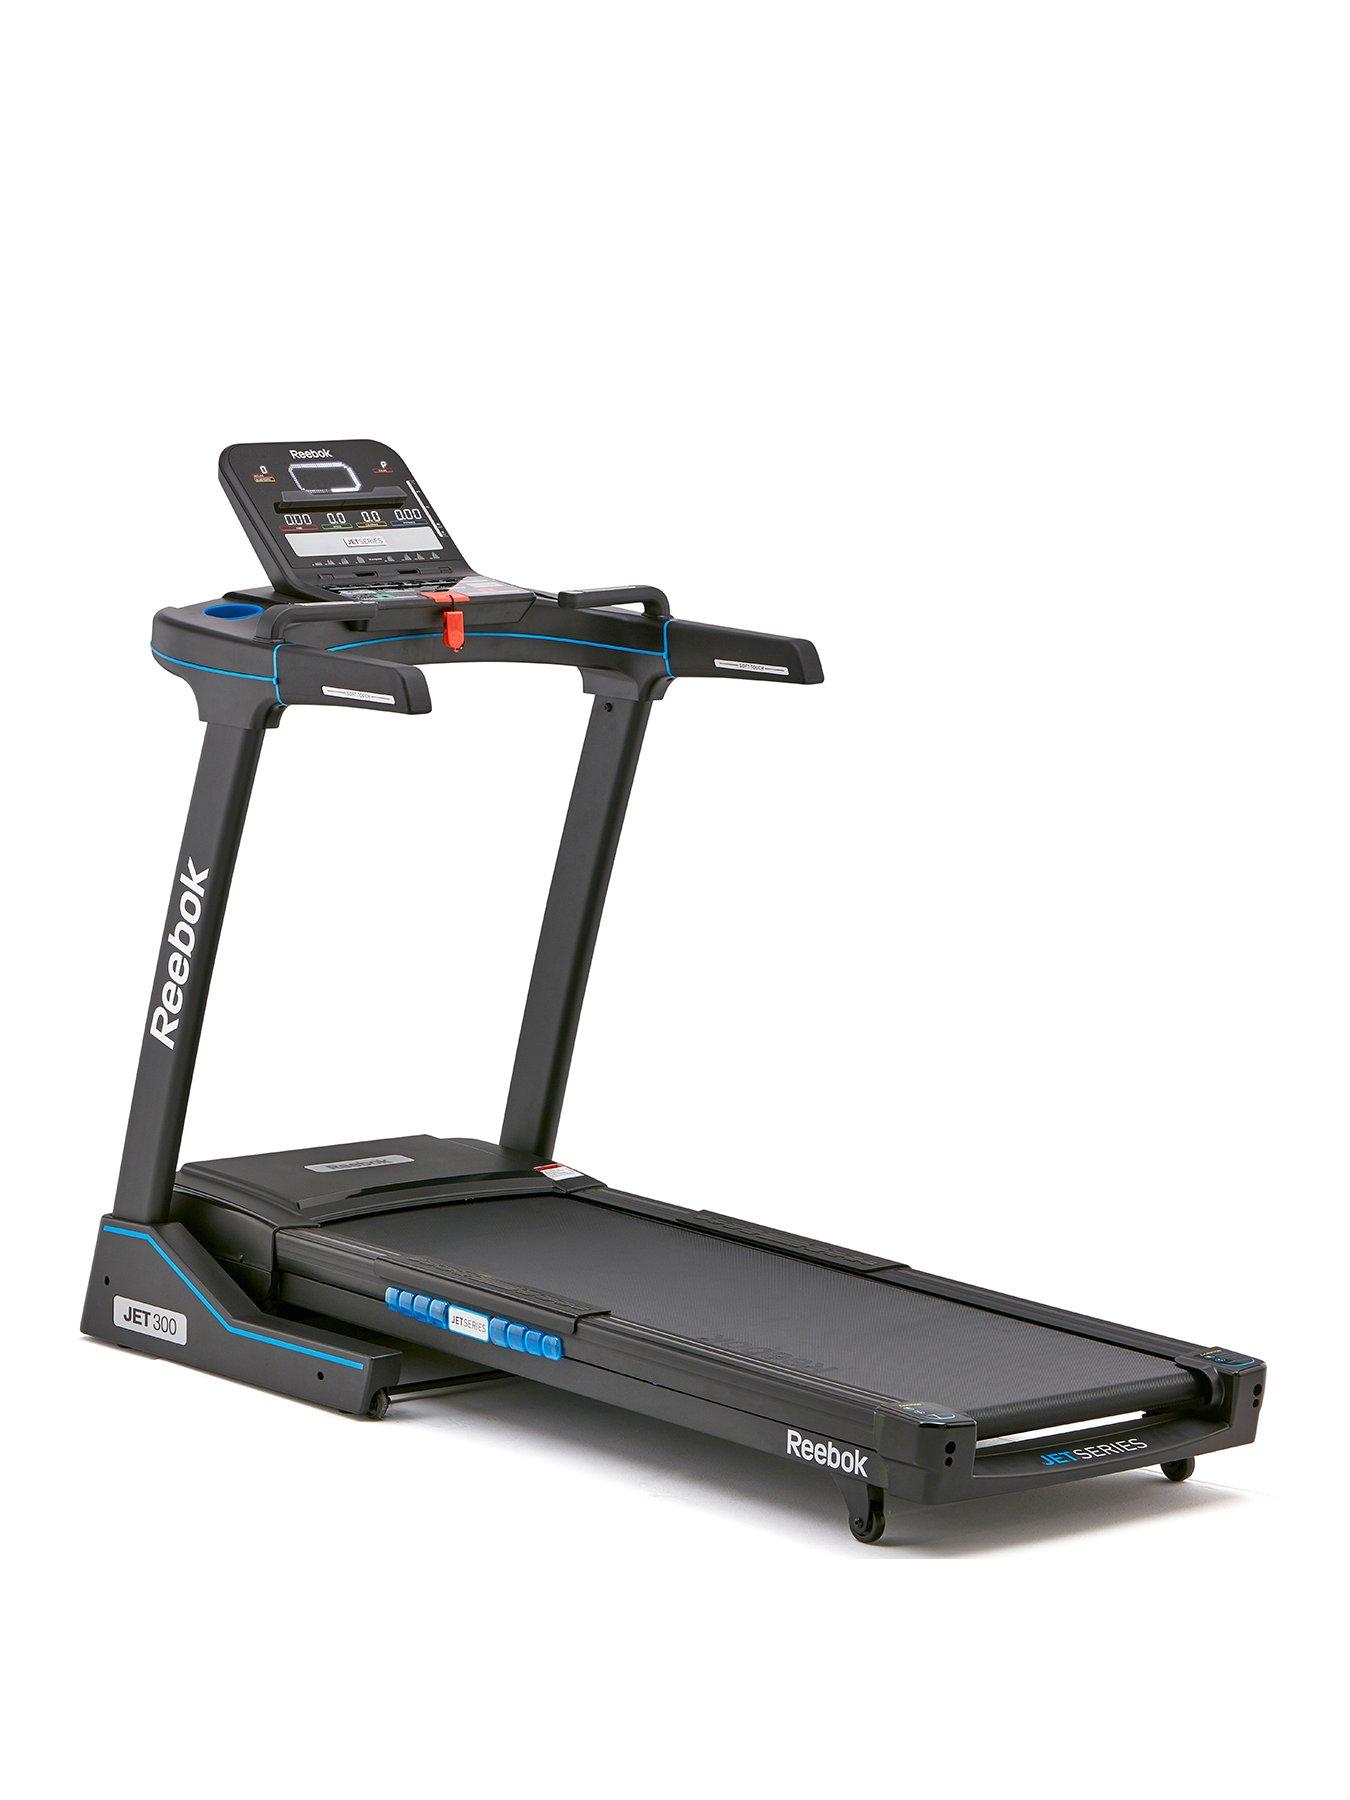 reebok 5 series treadmill manual - 63 